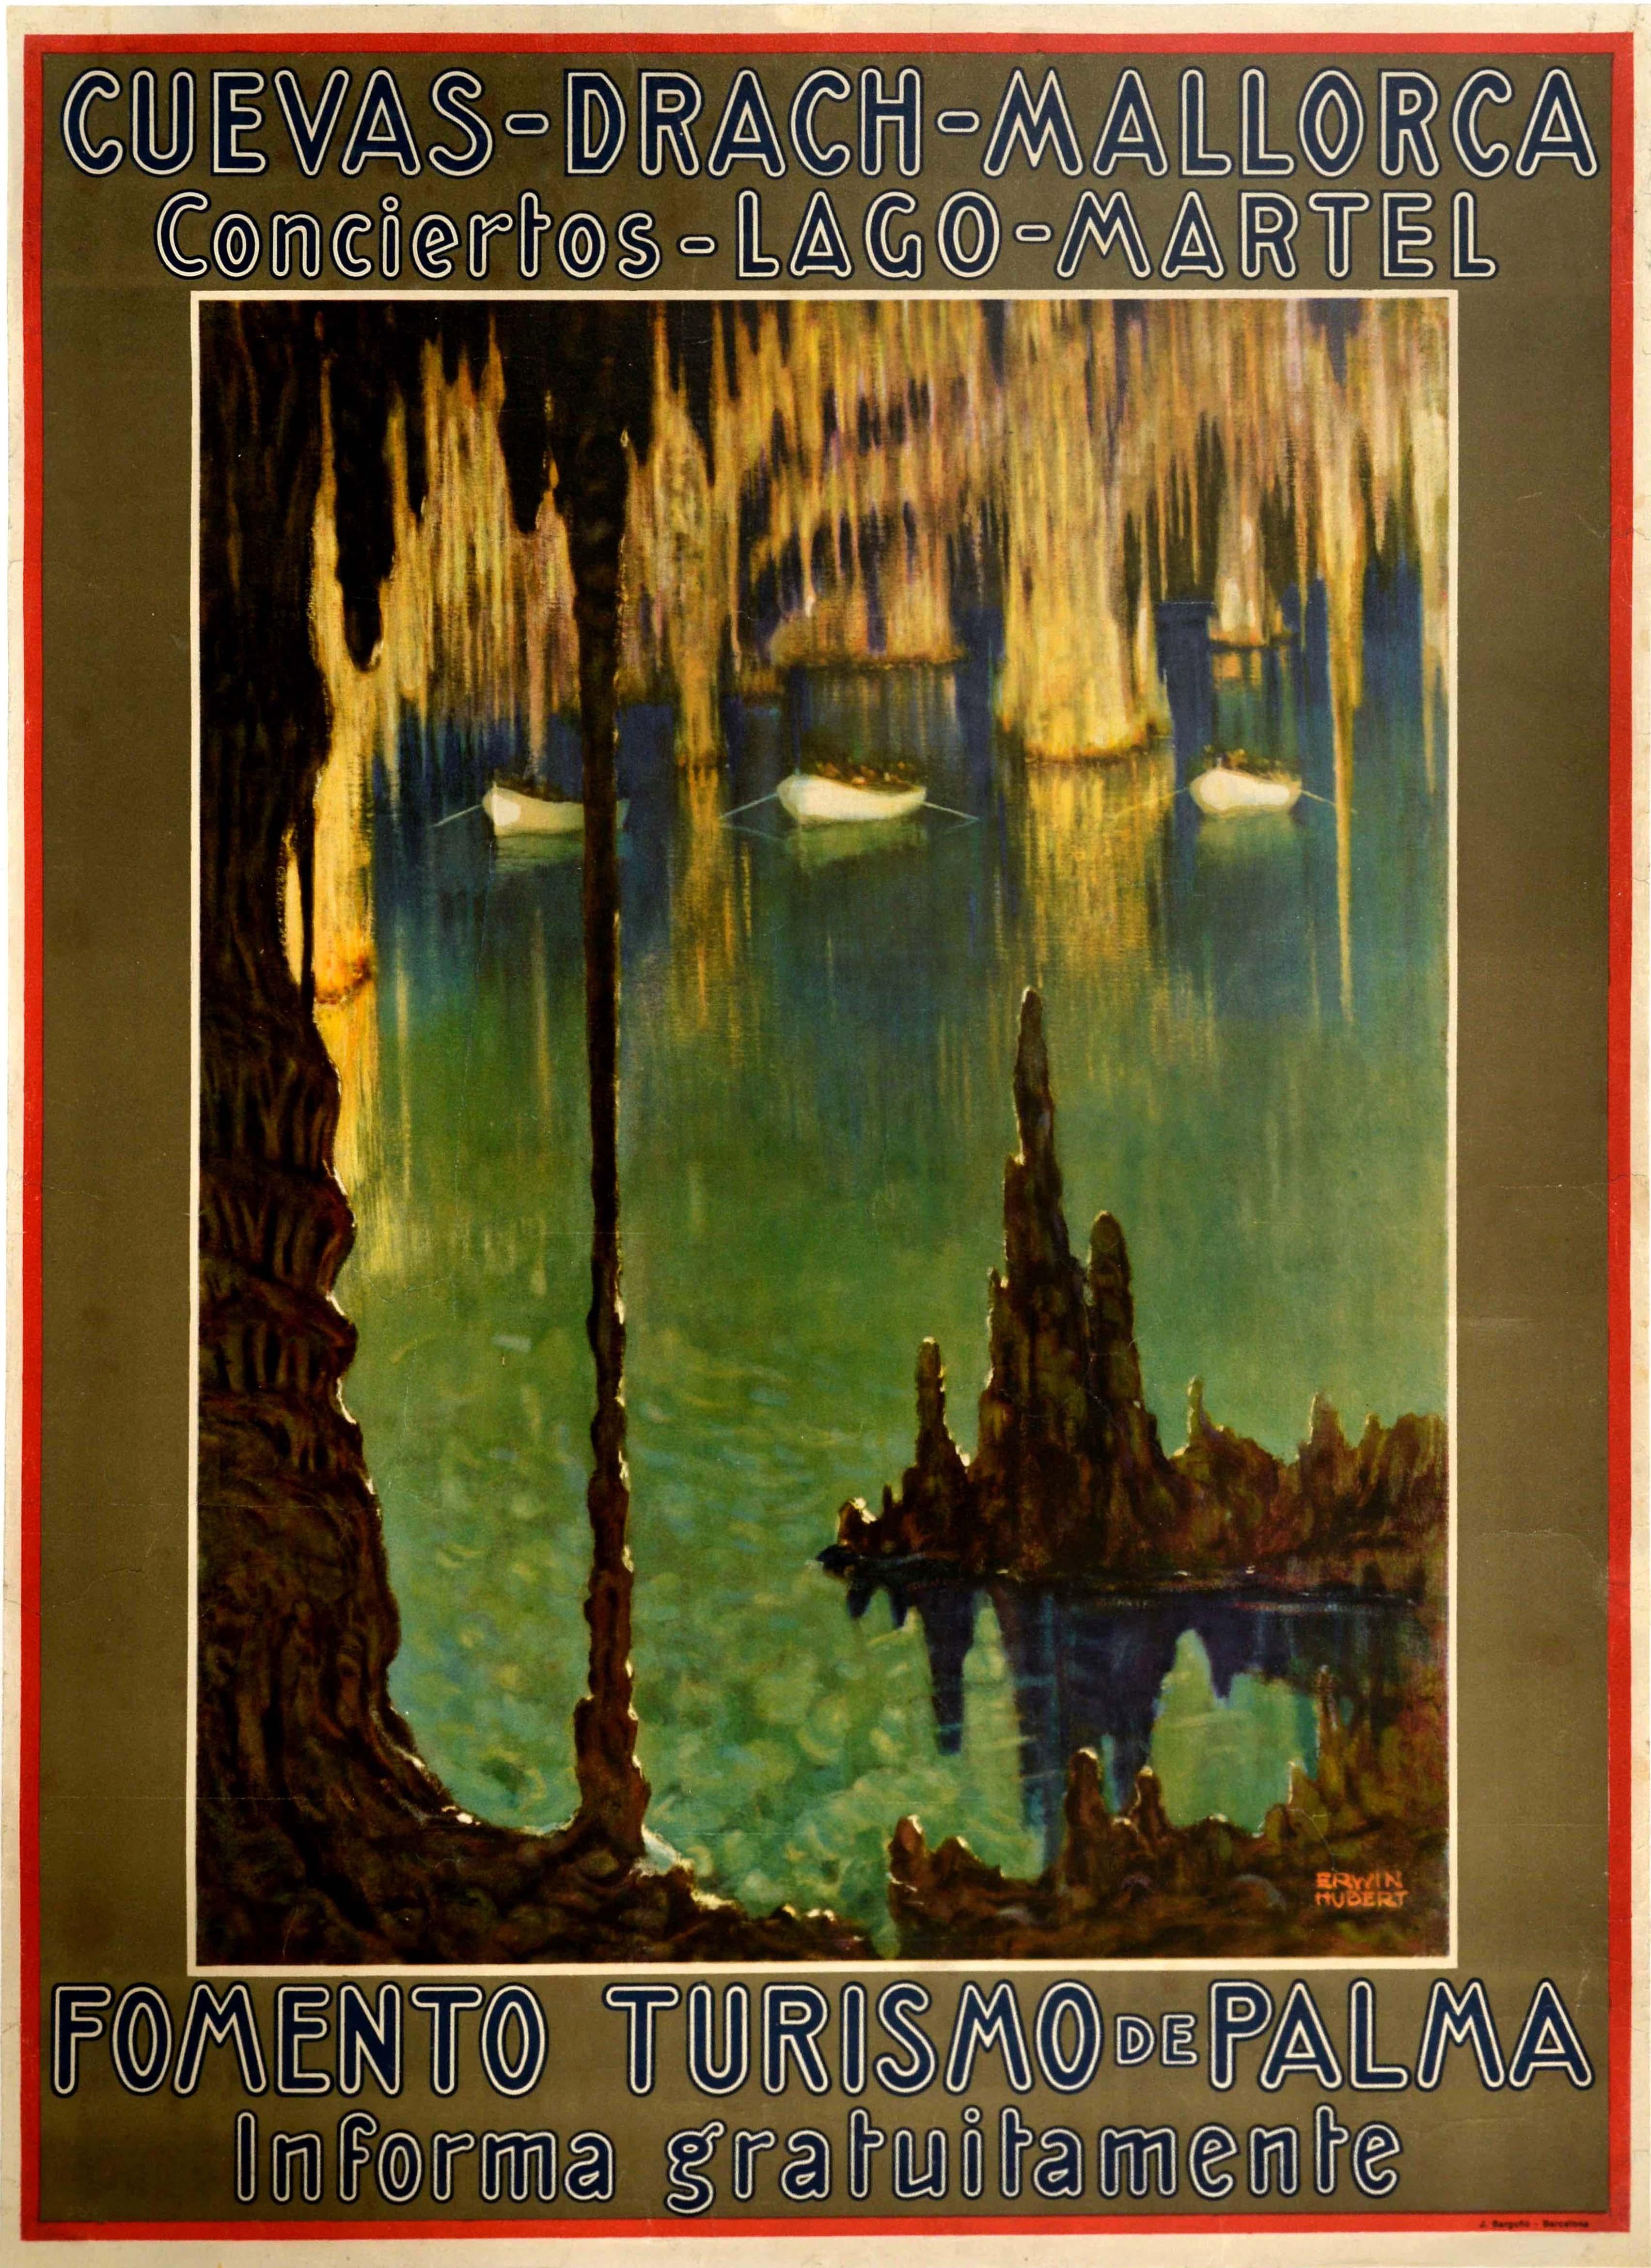 Erwin Hubert Print - Original Vintage Travel Poster Mallorca Cuevas Drach Caves Lake Martel Concerts